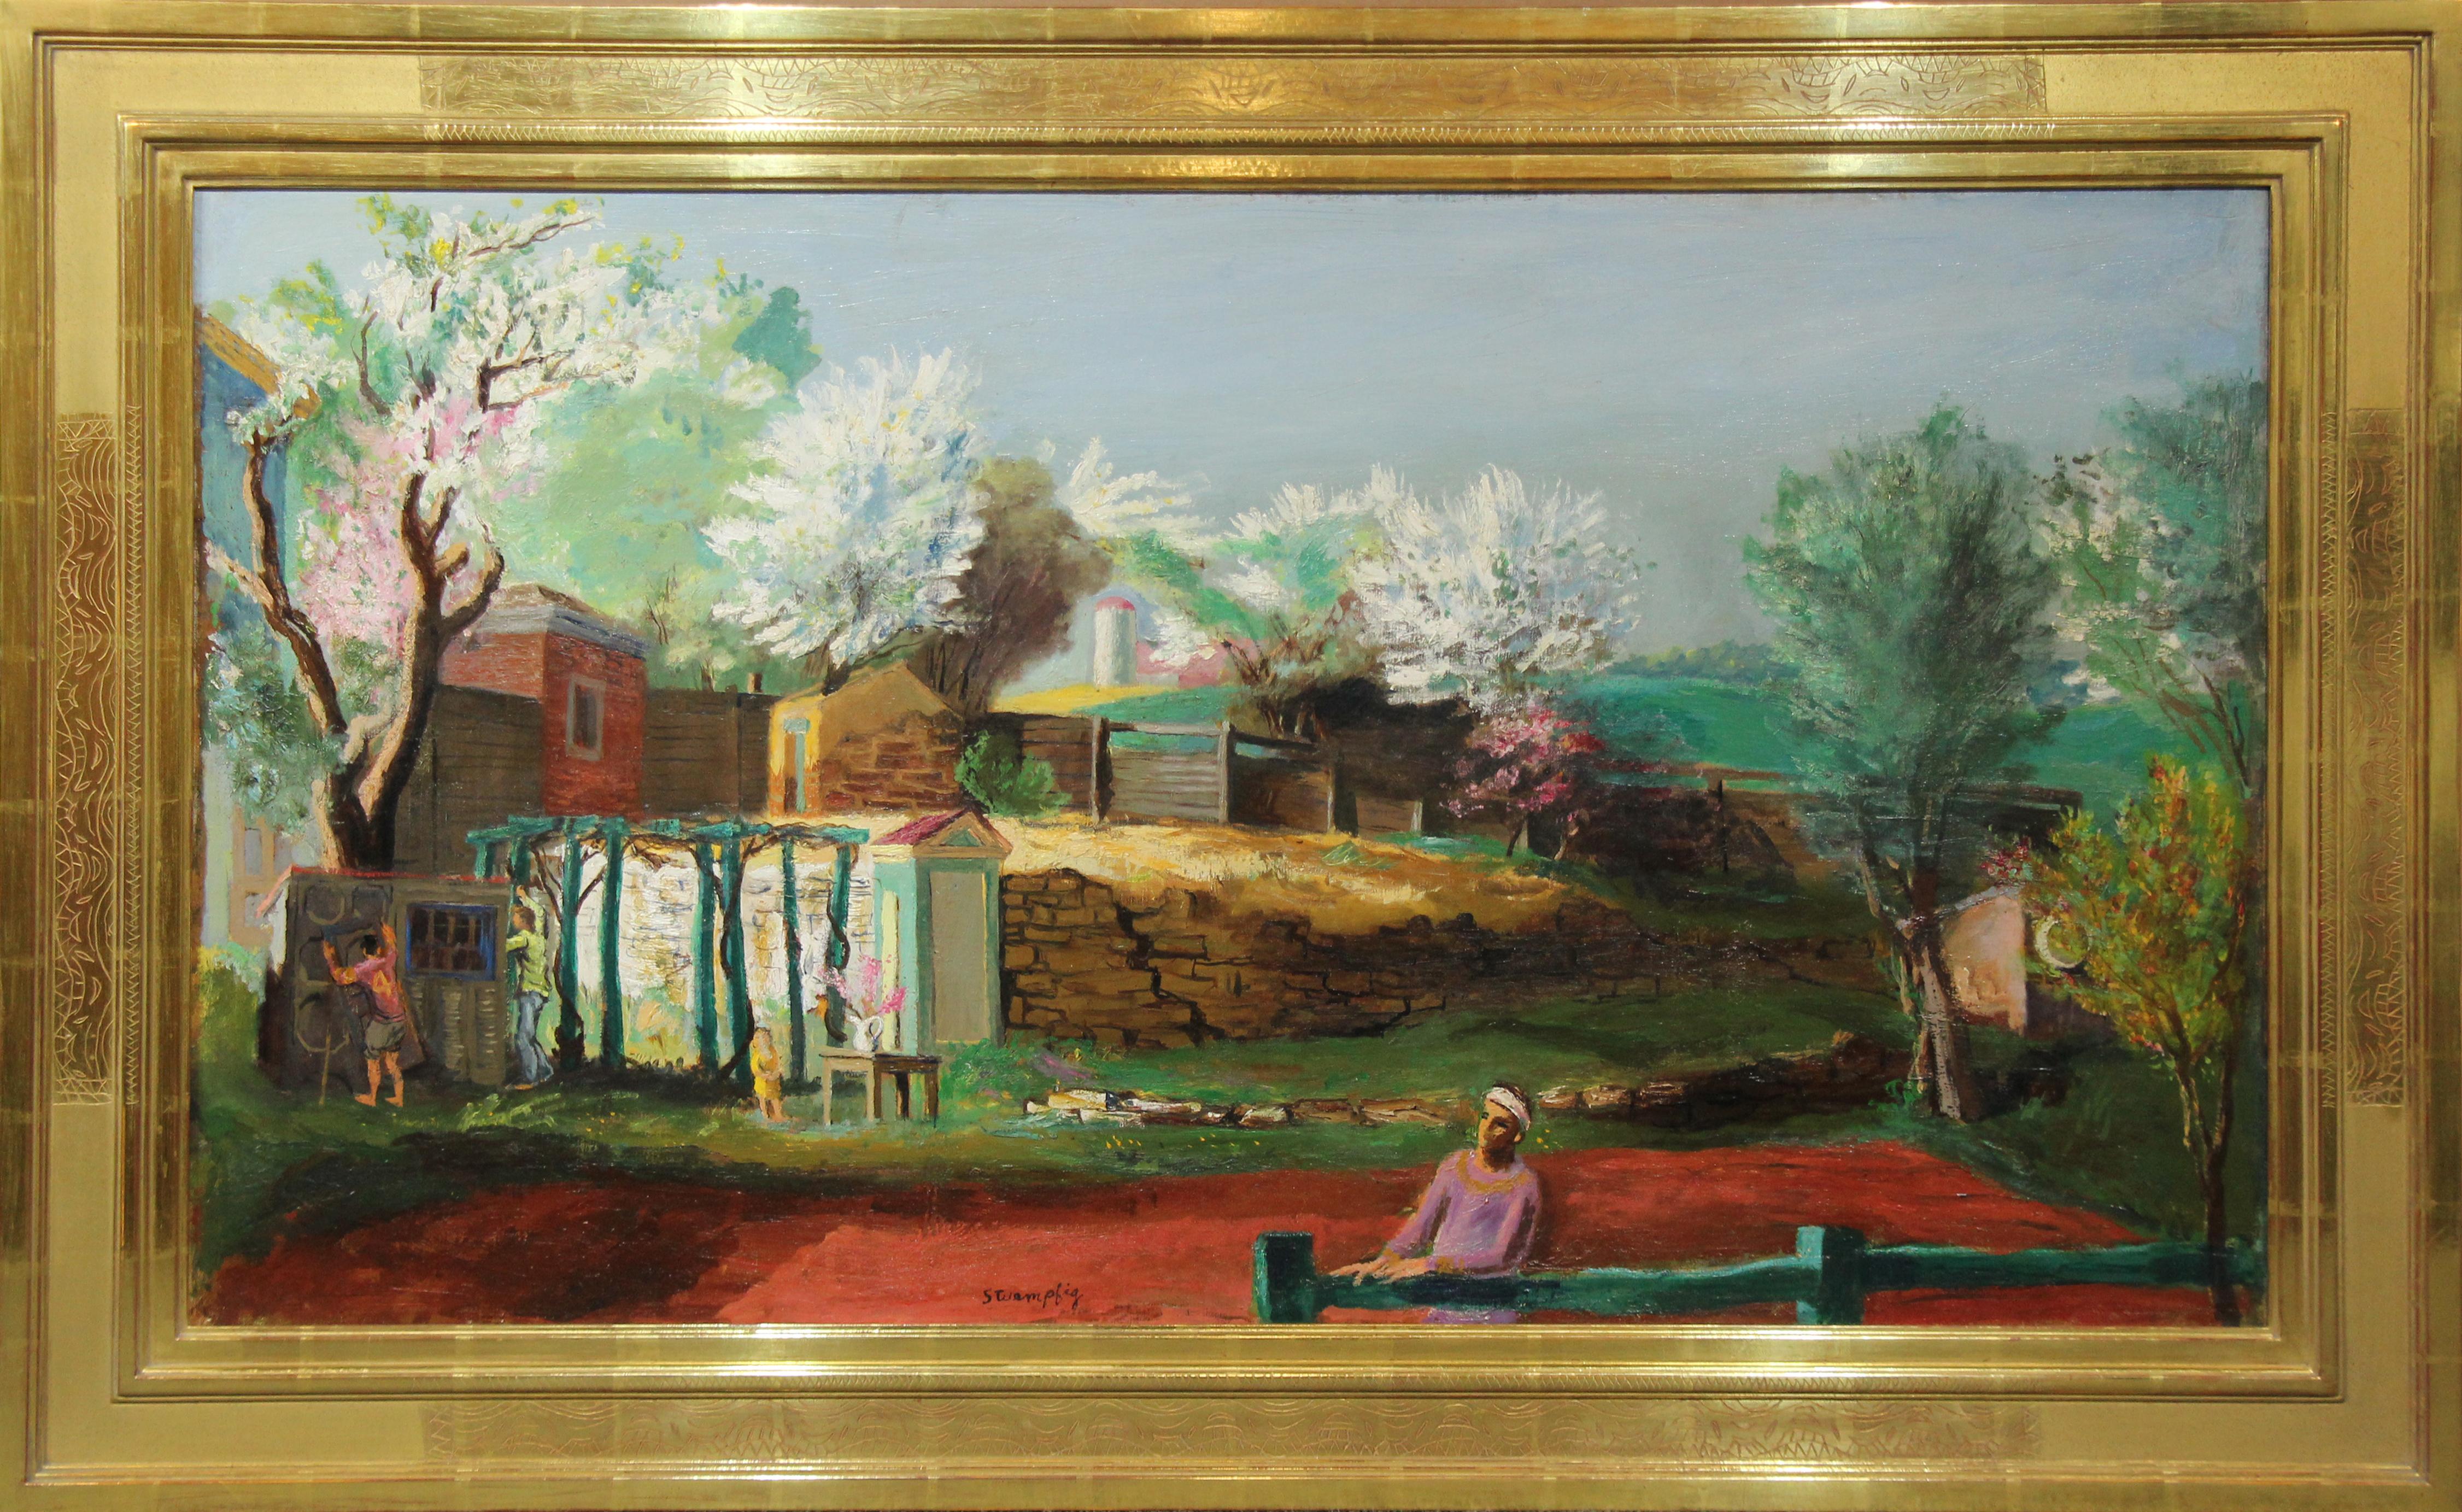 Walter Stuempfig Landscape Painting - Collegeville Farm, Regional Landscape by Romantic Realist, Pennsylvania painter